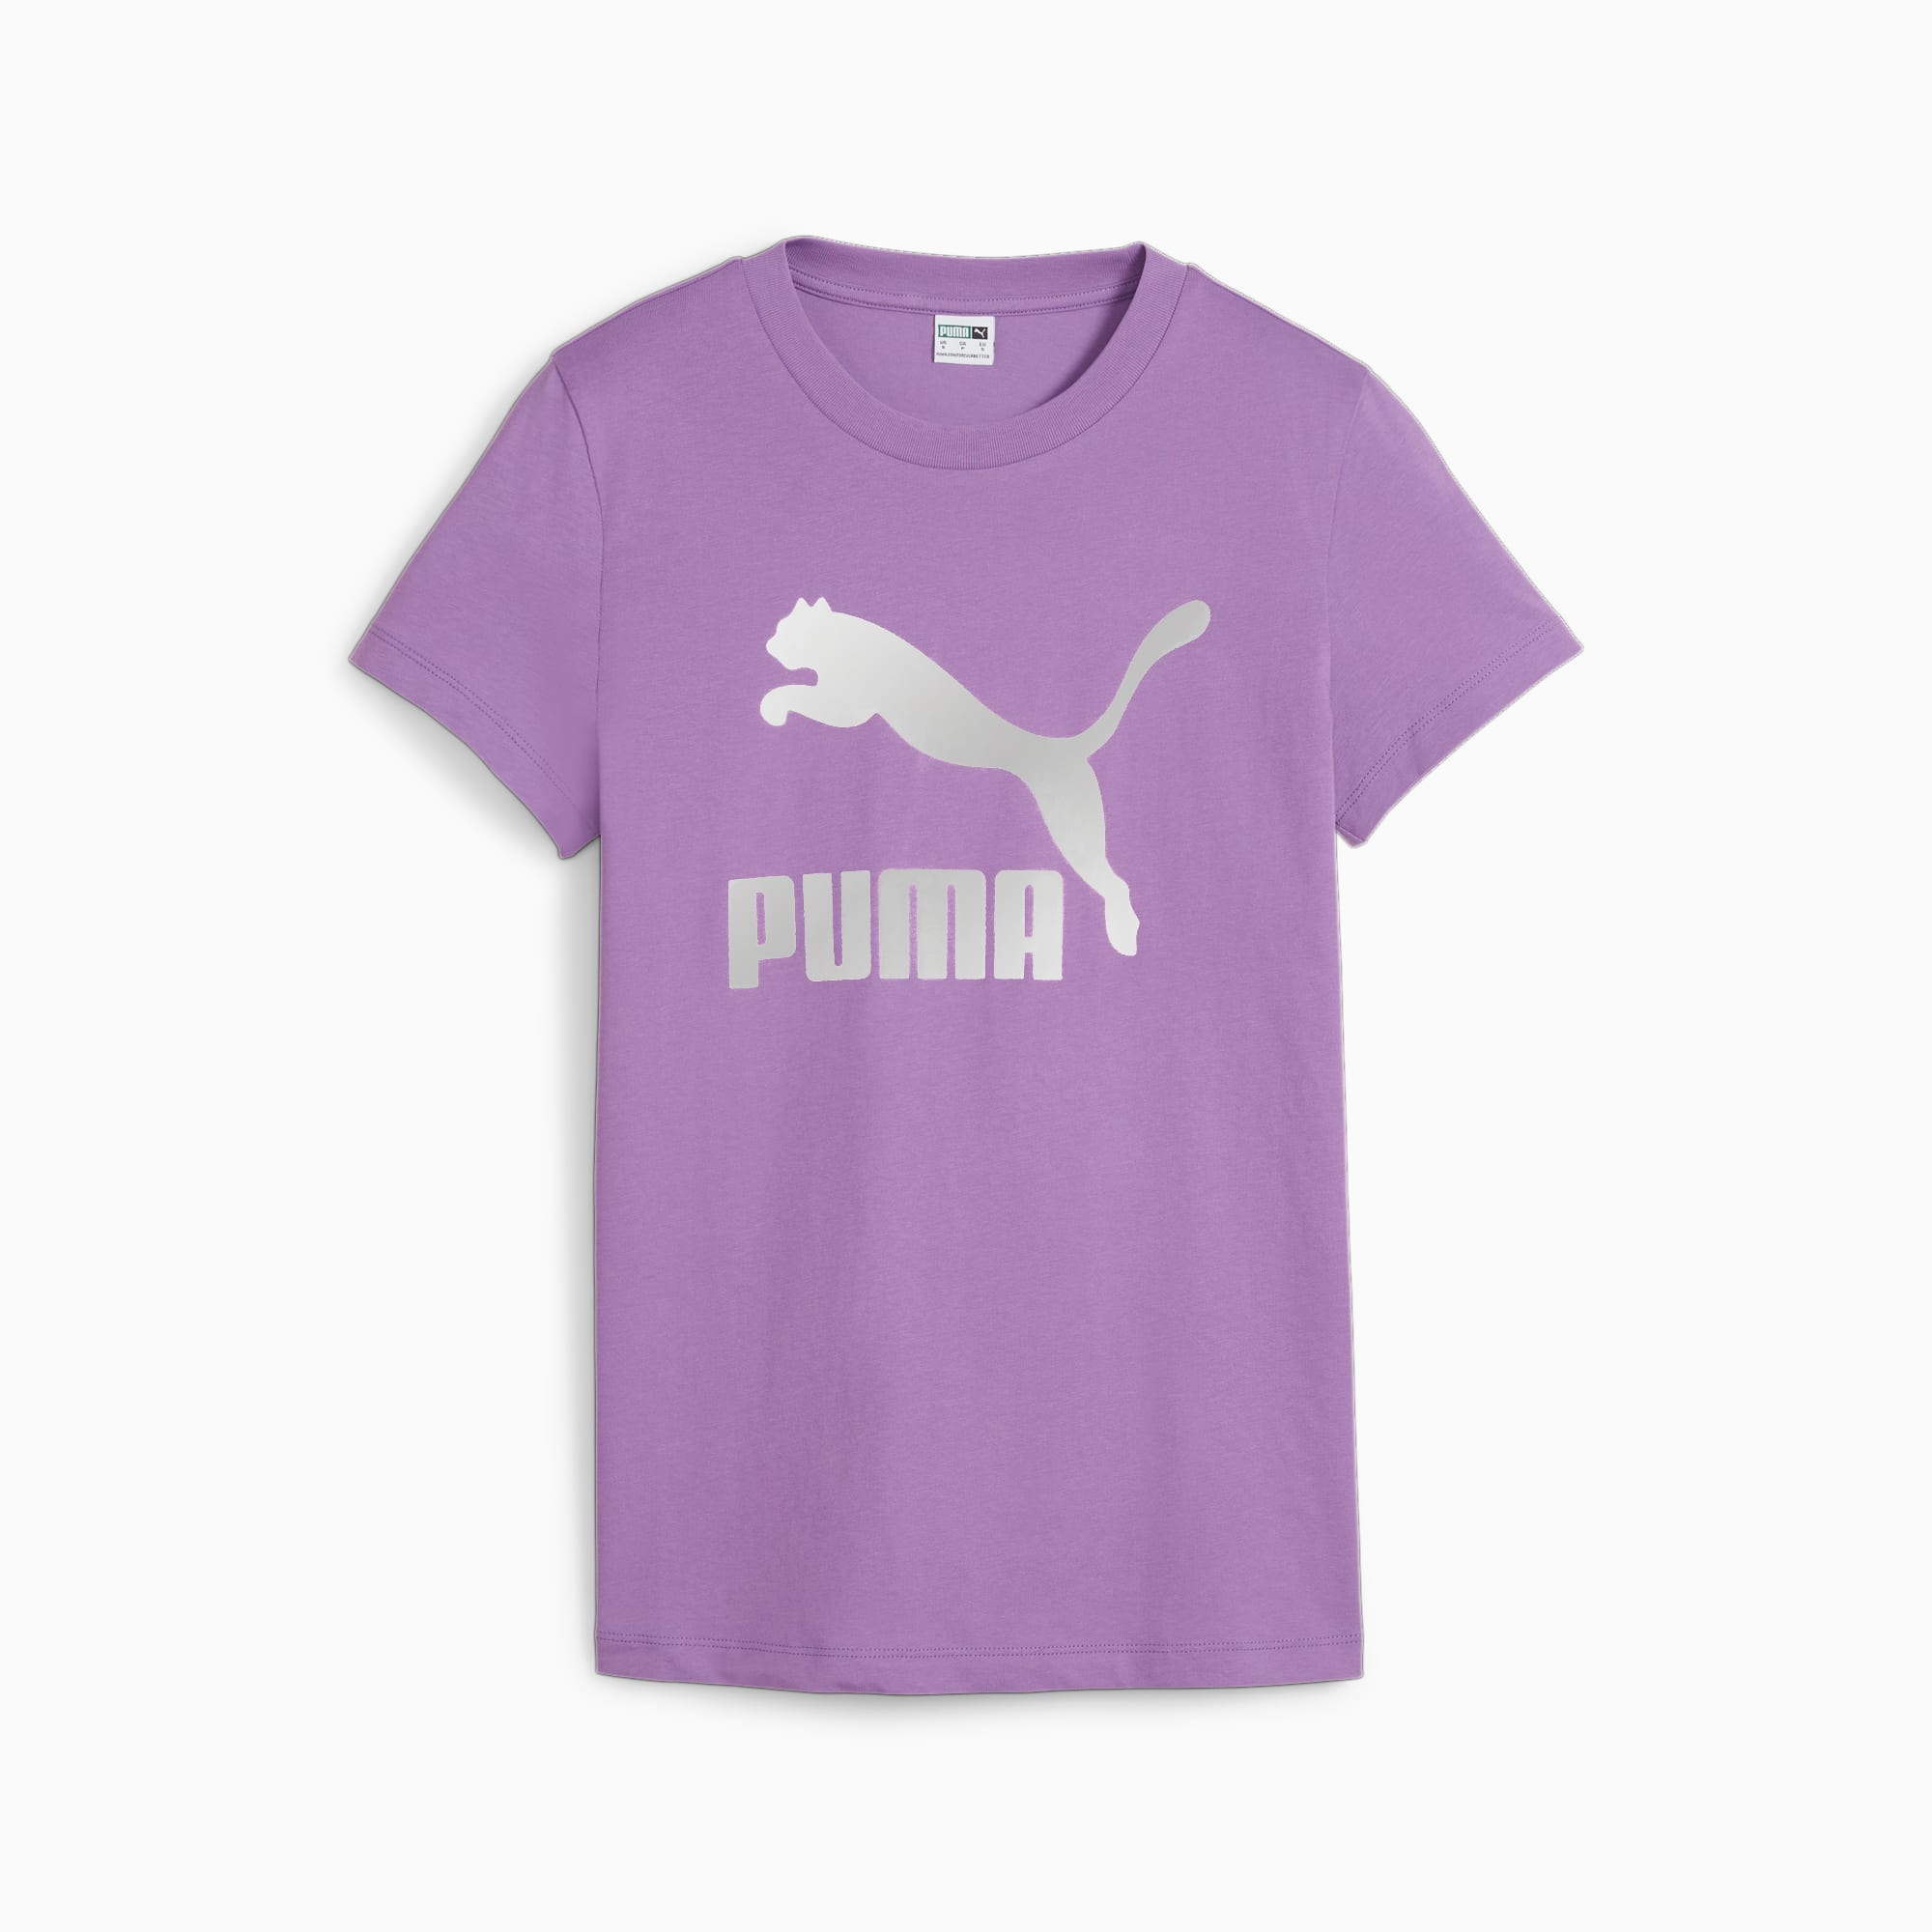 PUMA Classics Shiny Logo Women's T-Shirt, Ultraviolet, Size XS, Clothing